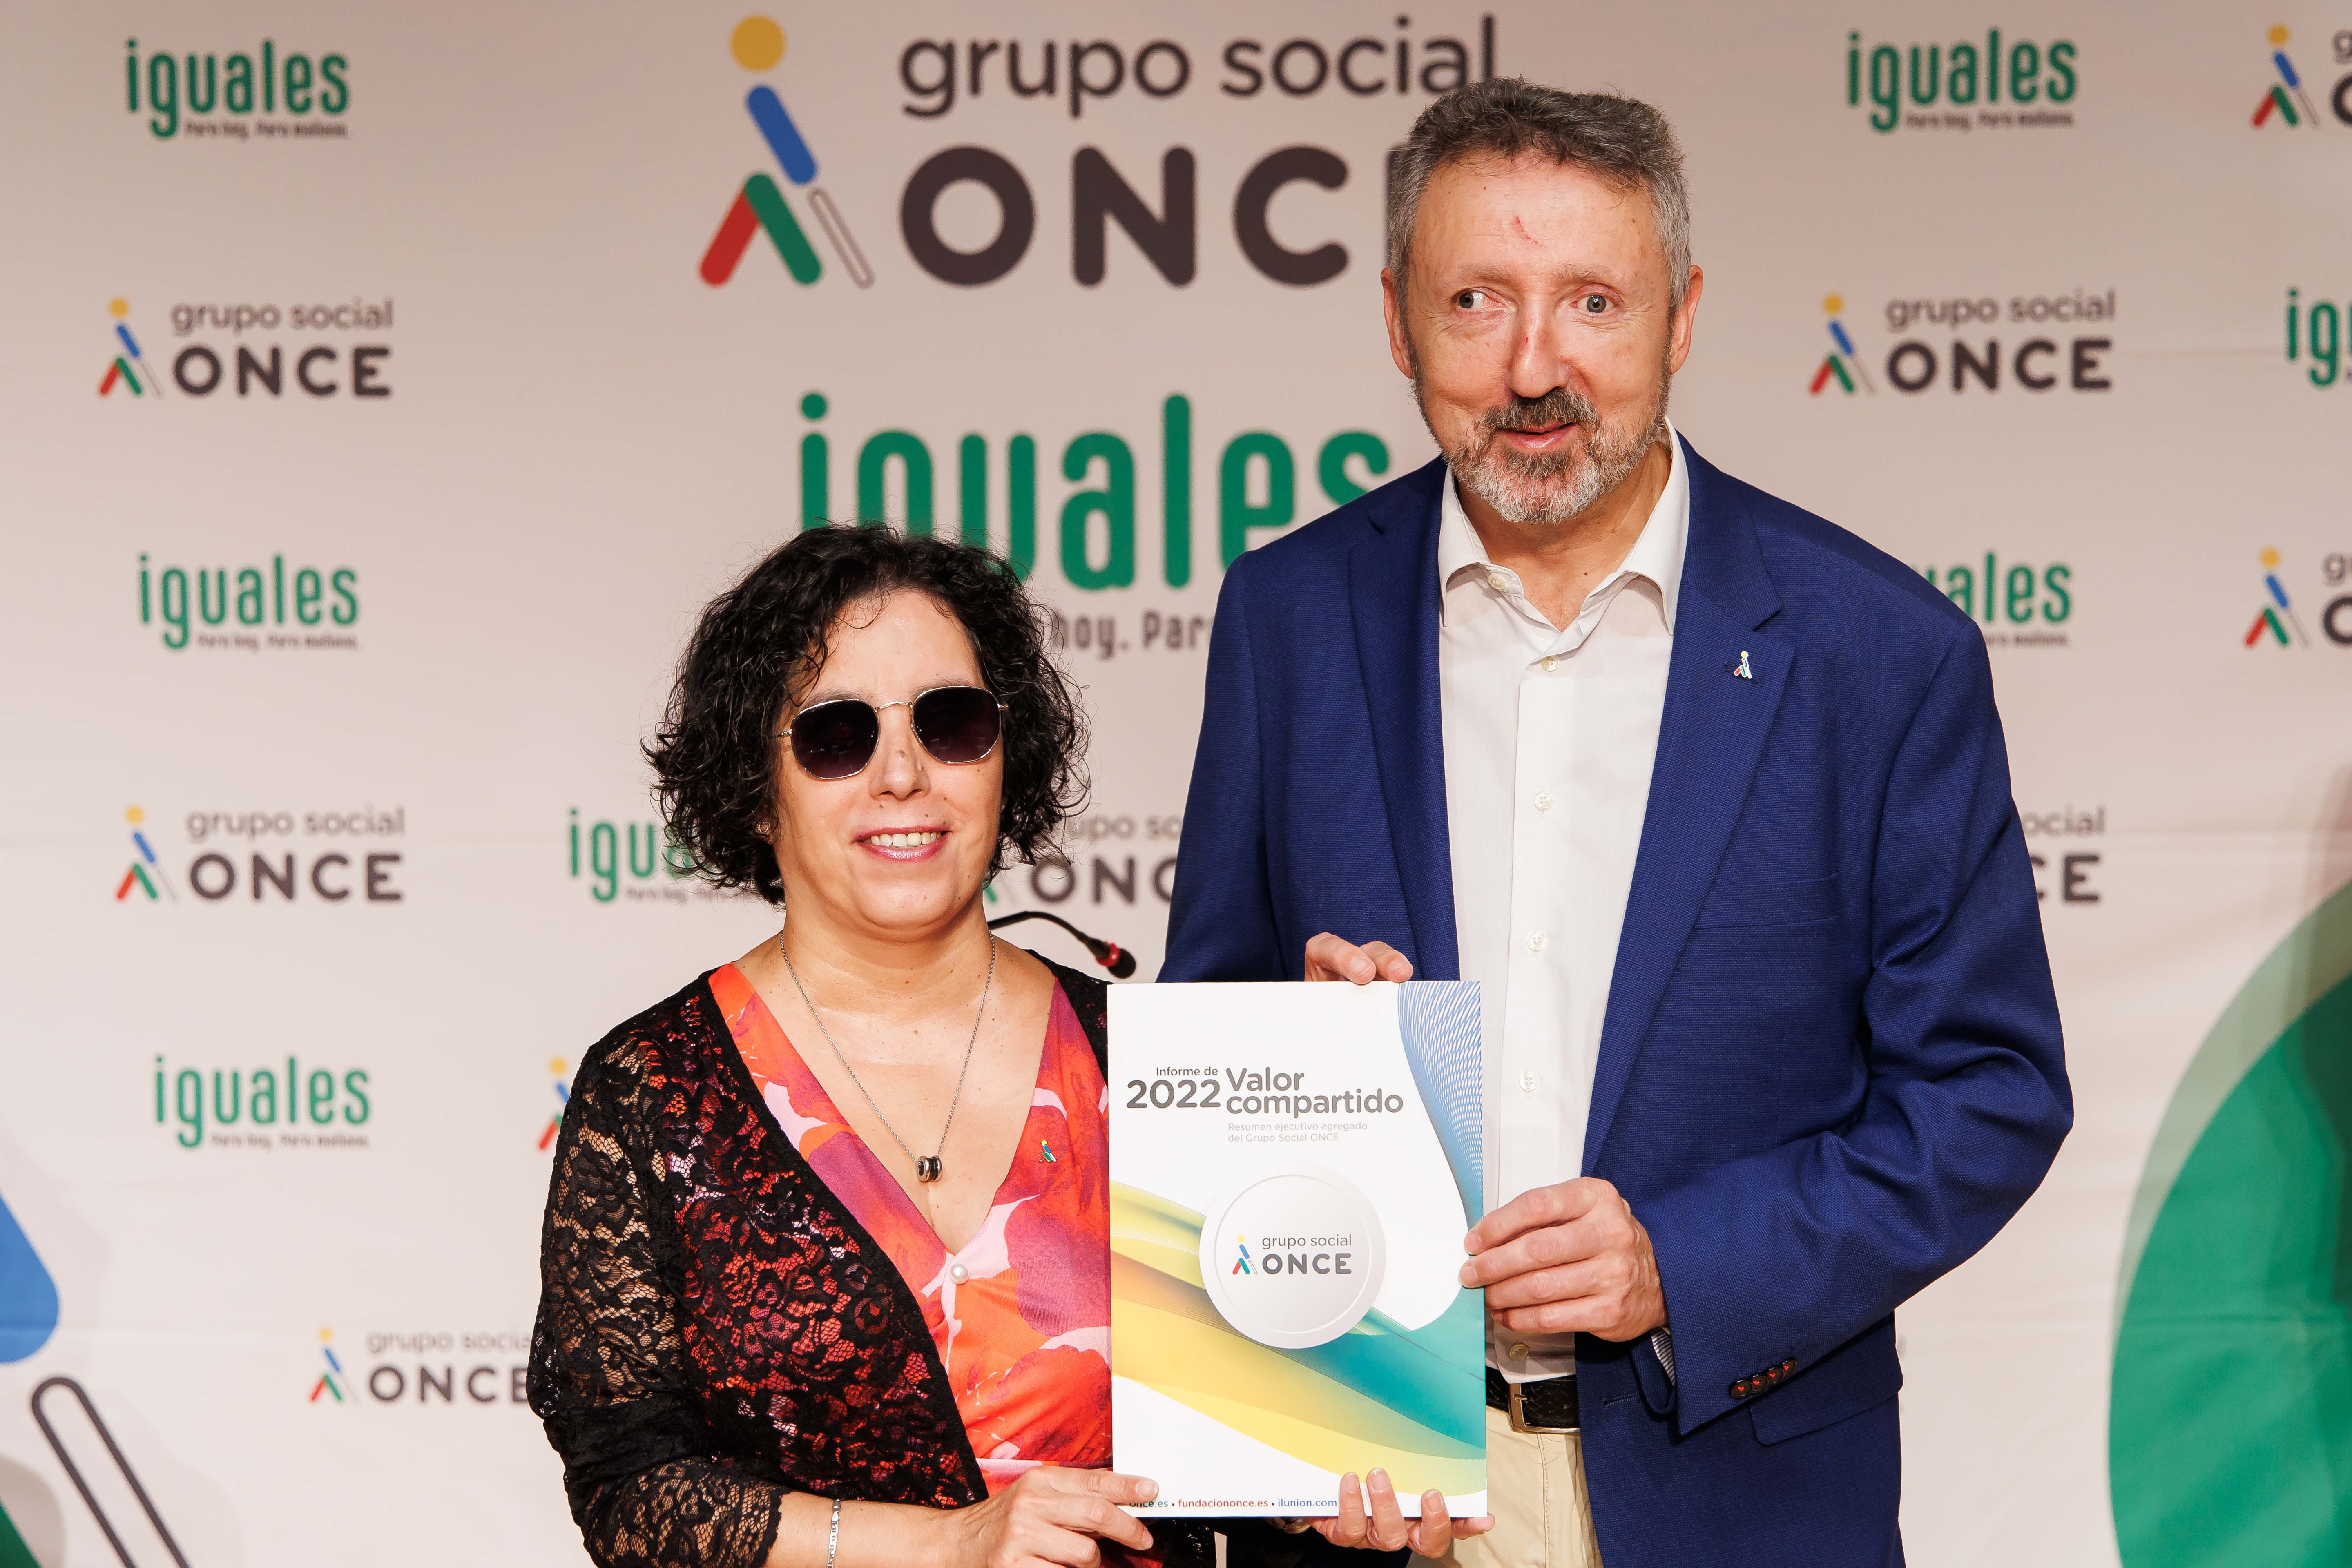 Cristóbal Martínez e Isabel Viruet presentan el Informe de Valor Compartido 2022 del Grupo Social ONCE en Andalucía